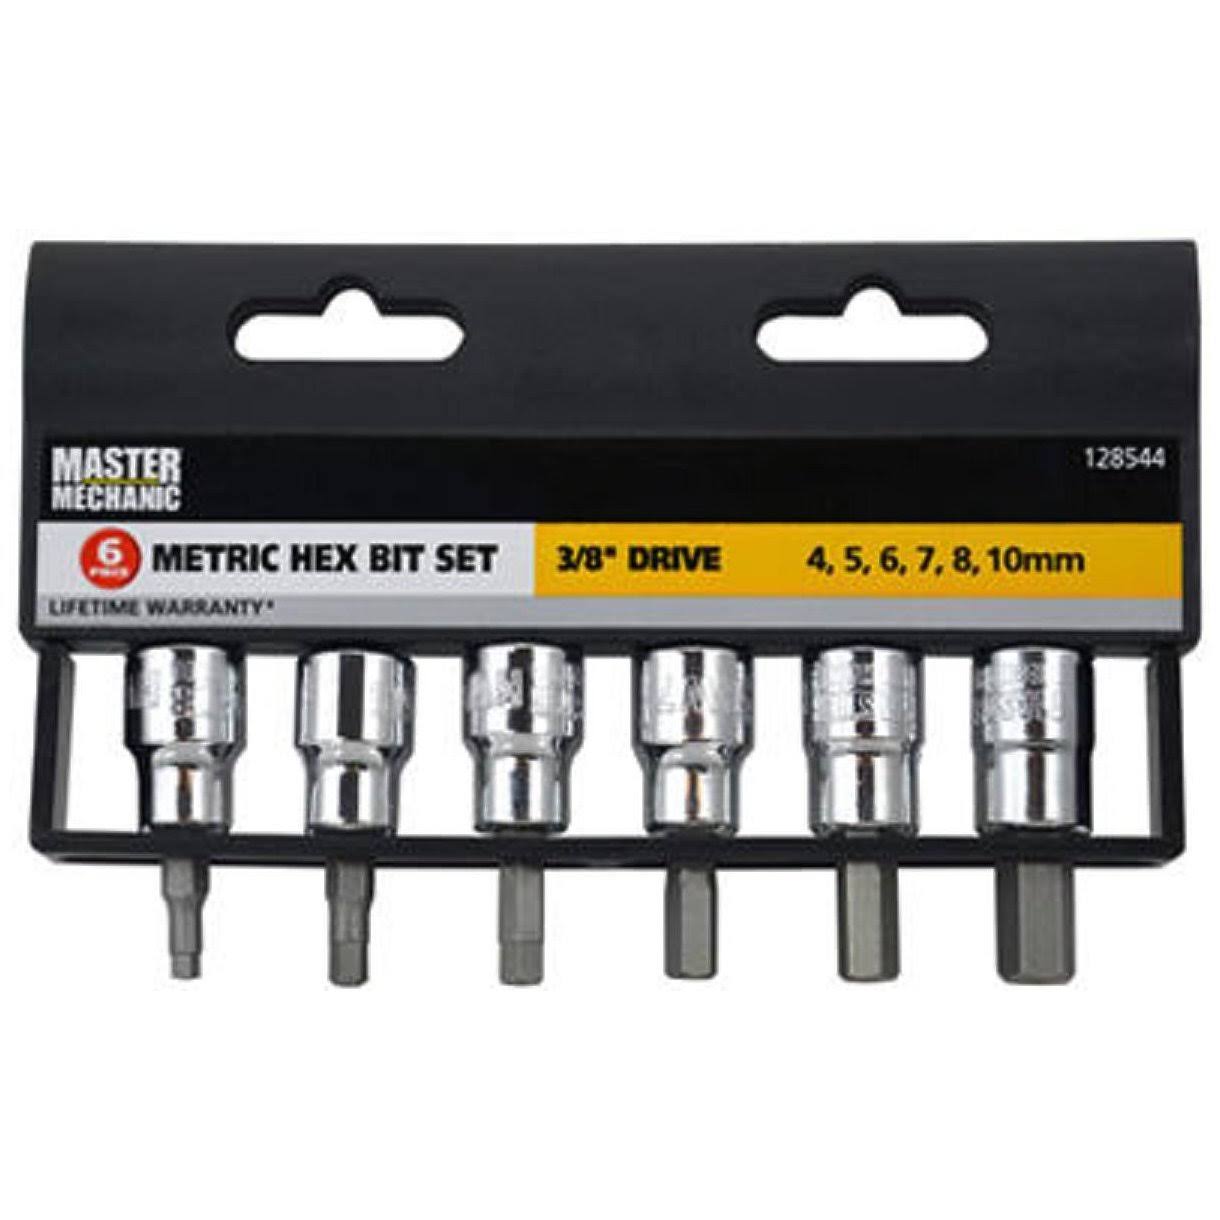 Apex Tool Group Asia Metric Hex Bit Socket Set - Set of 6